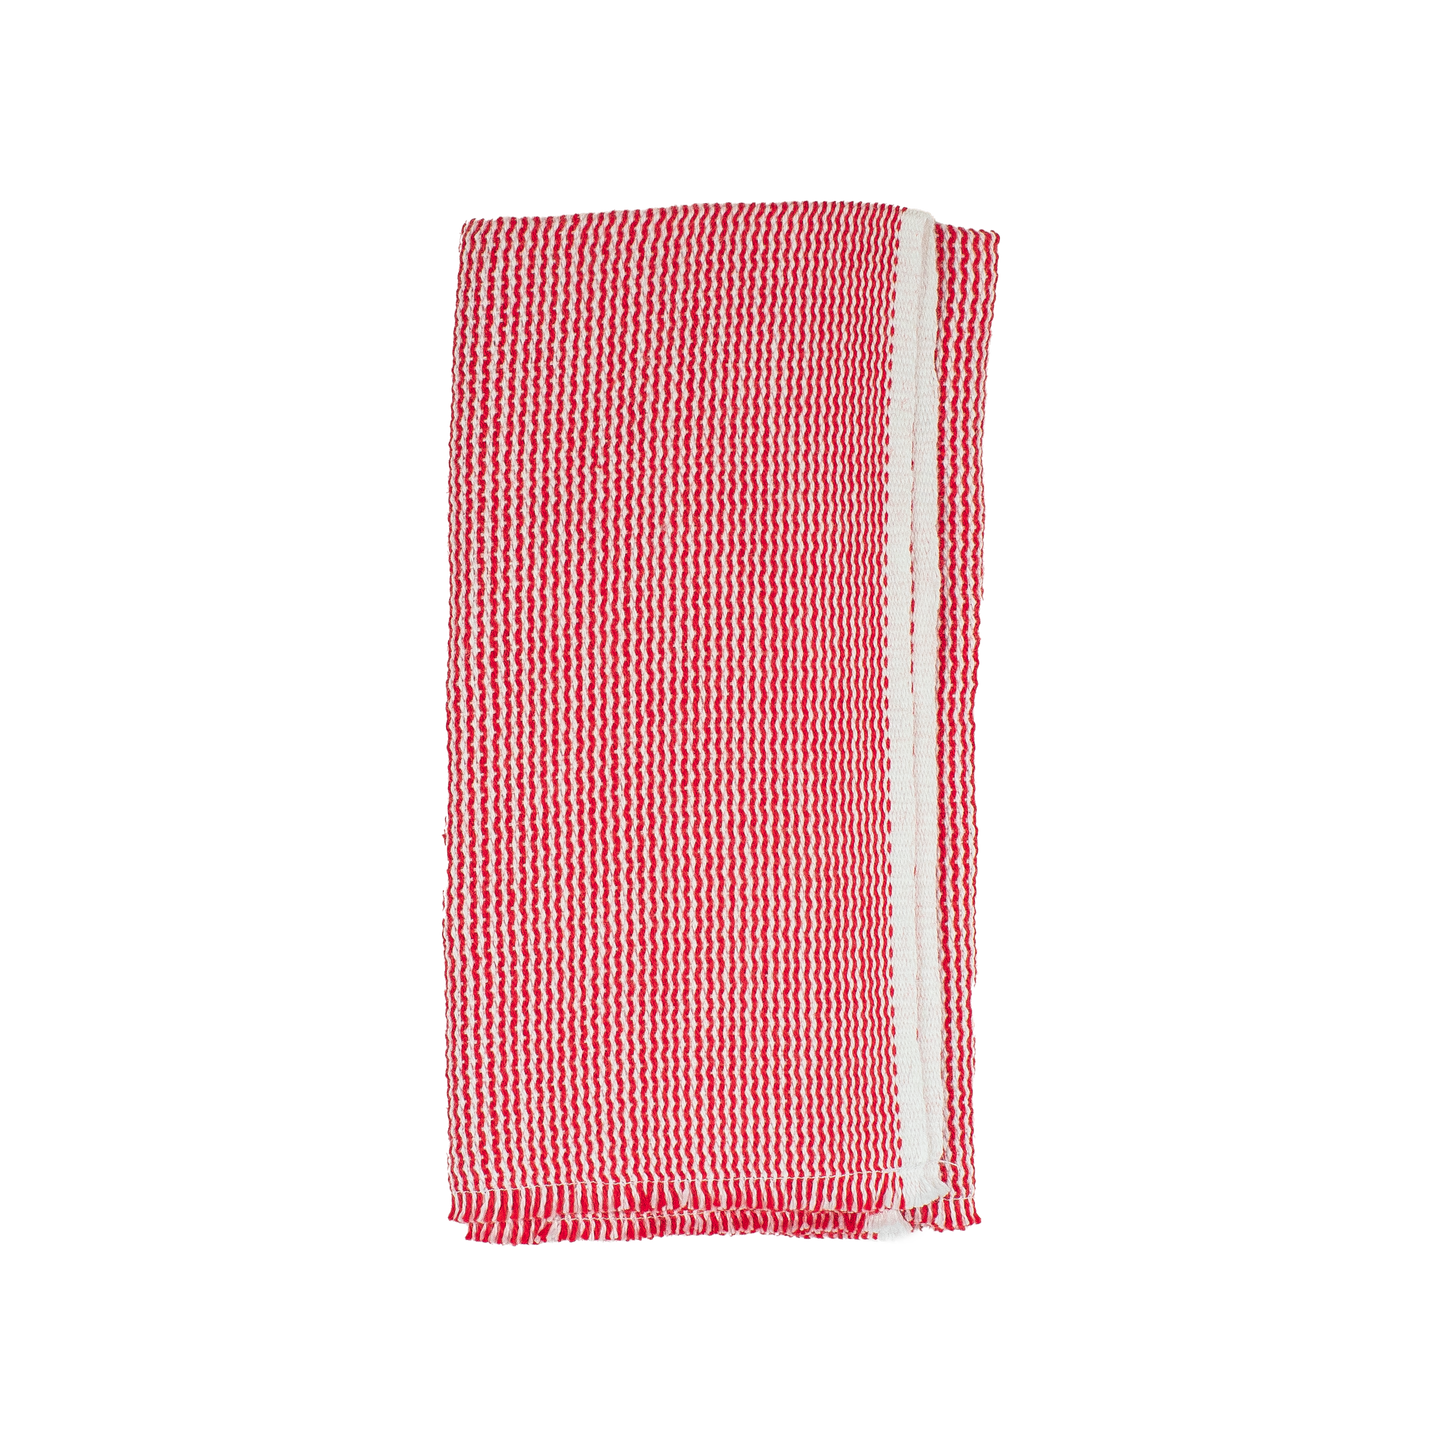 Folded red and white zigzag napkin